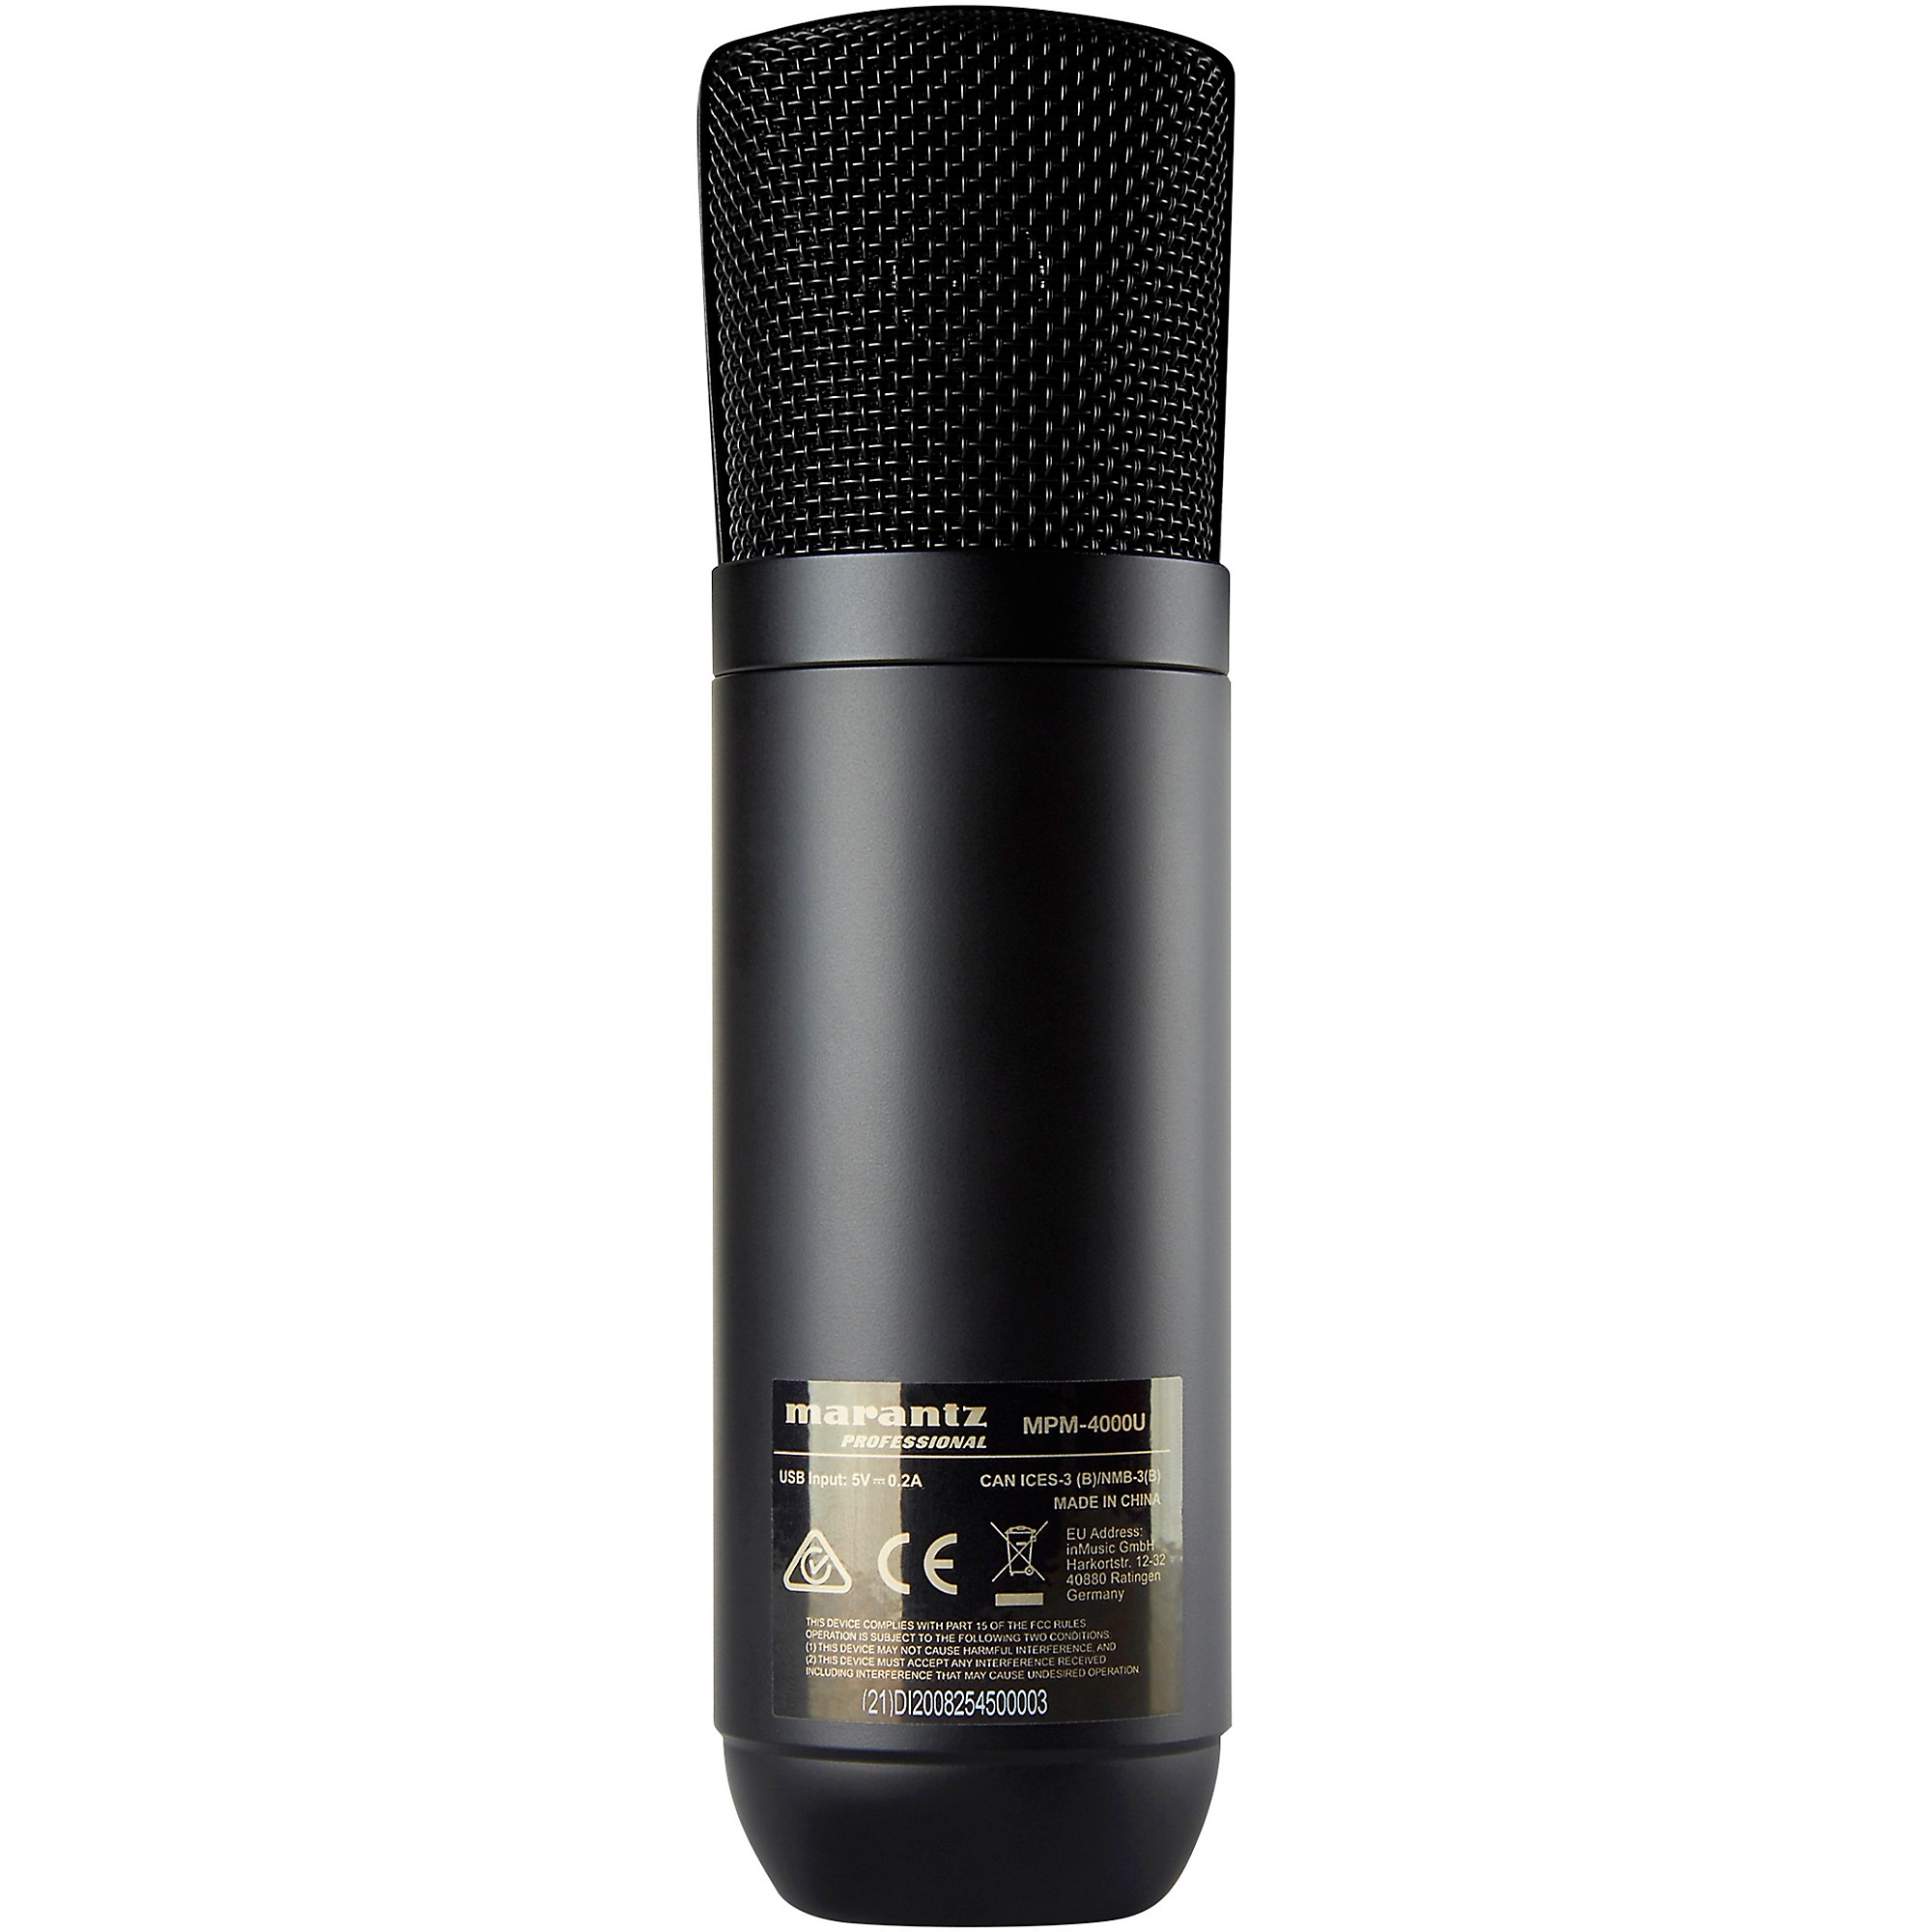 Marantz Professional MPM-4000U USB Podcasting Microphone ...